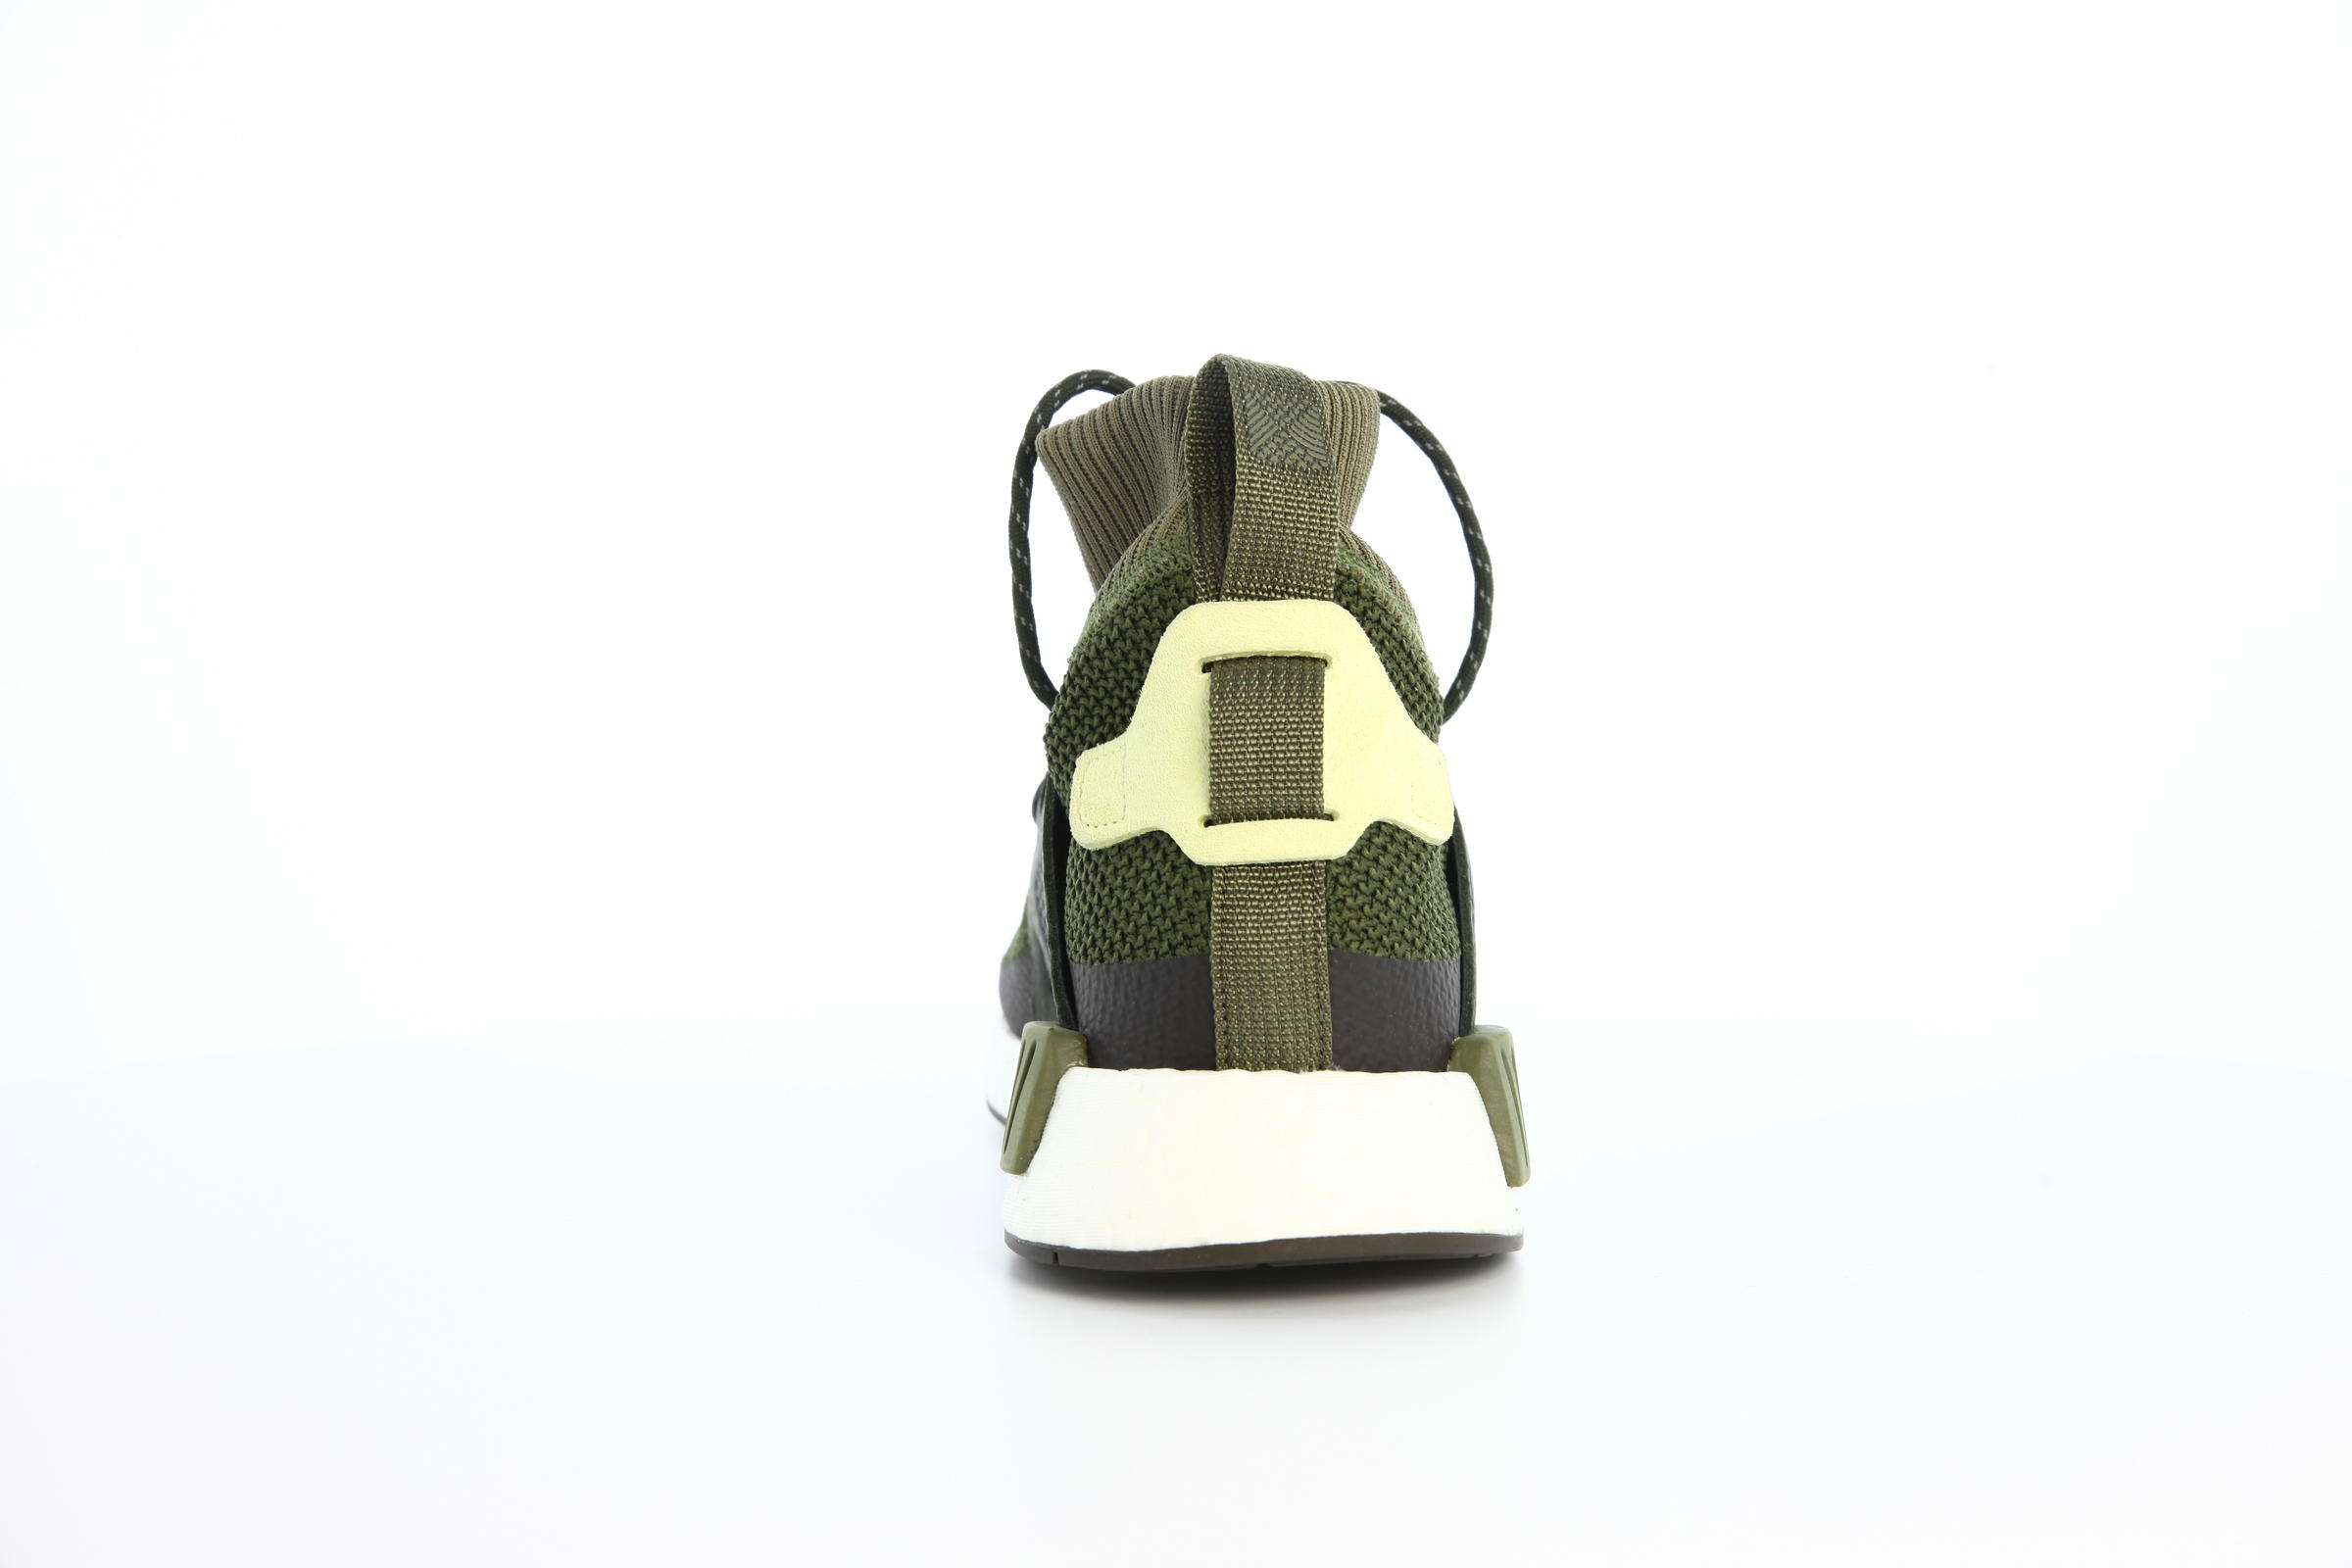 adidas Originals NMD_XR1 Runner Winter Pack "Olive Cargo"